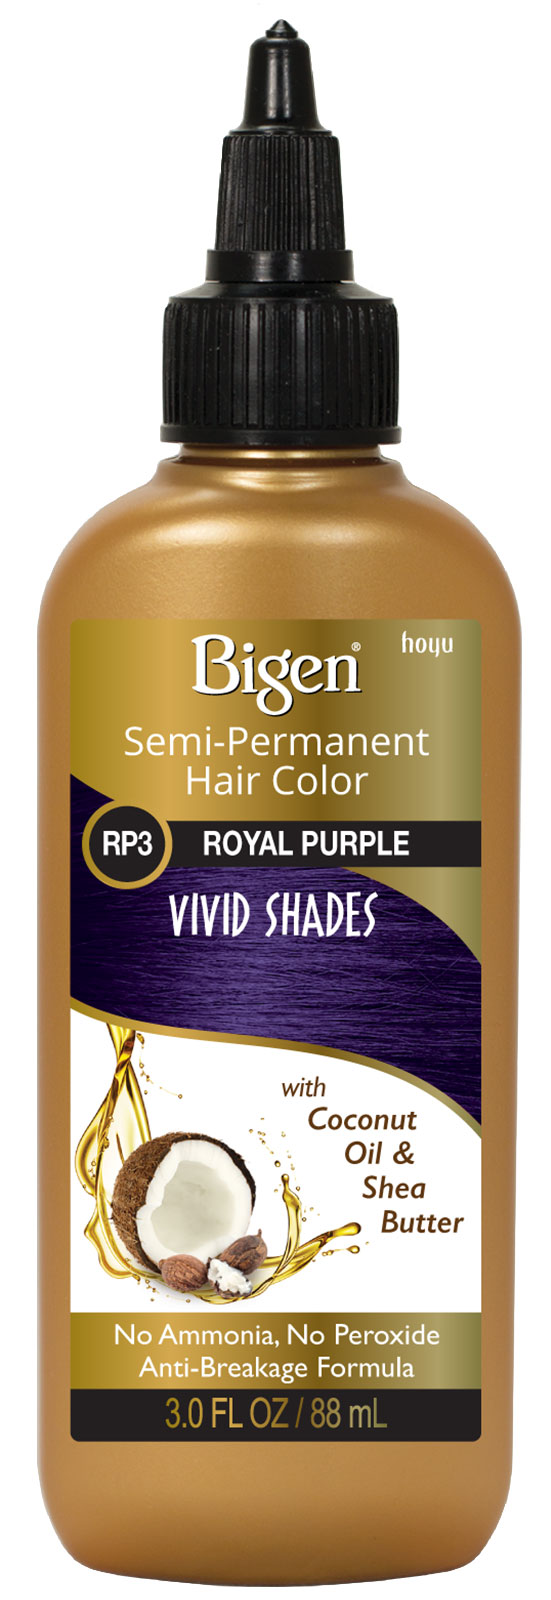 02018-Royal Purple